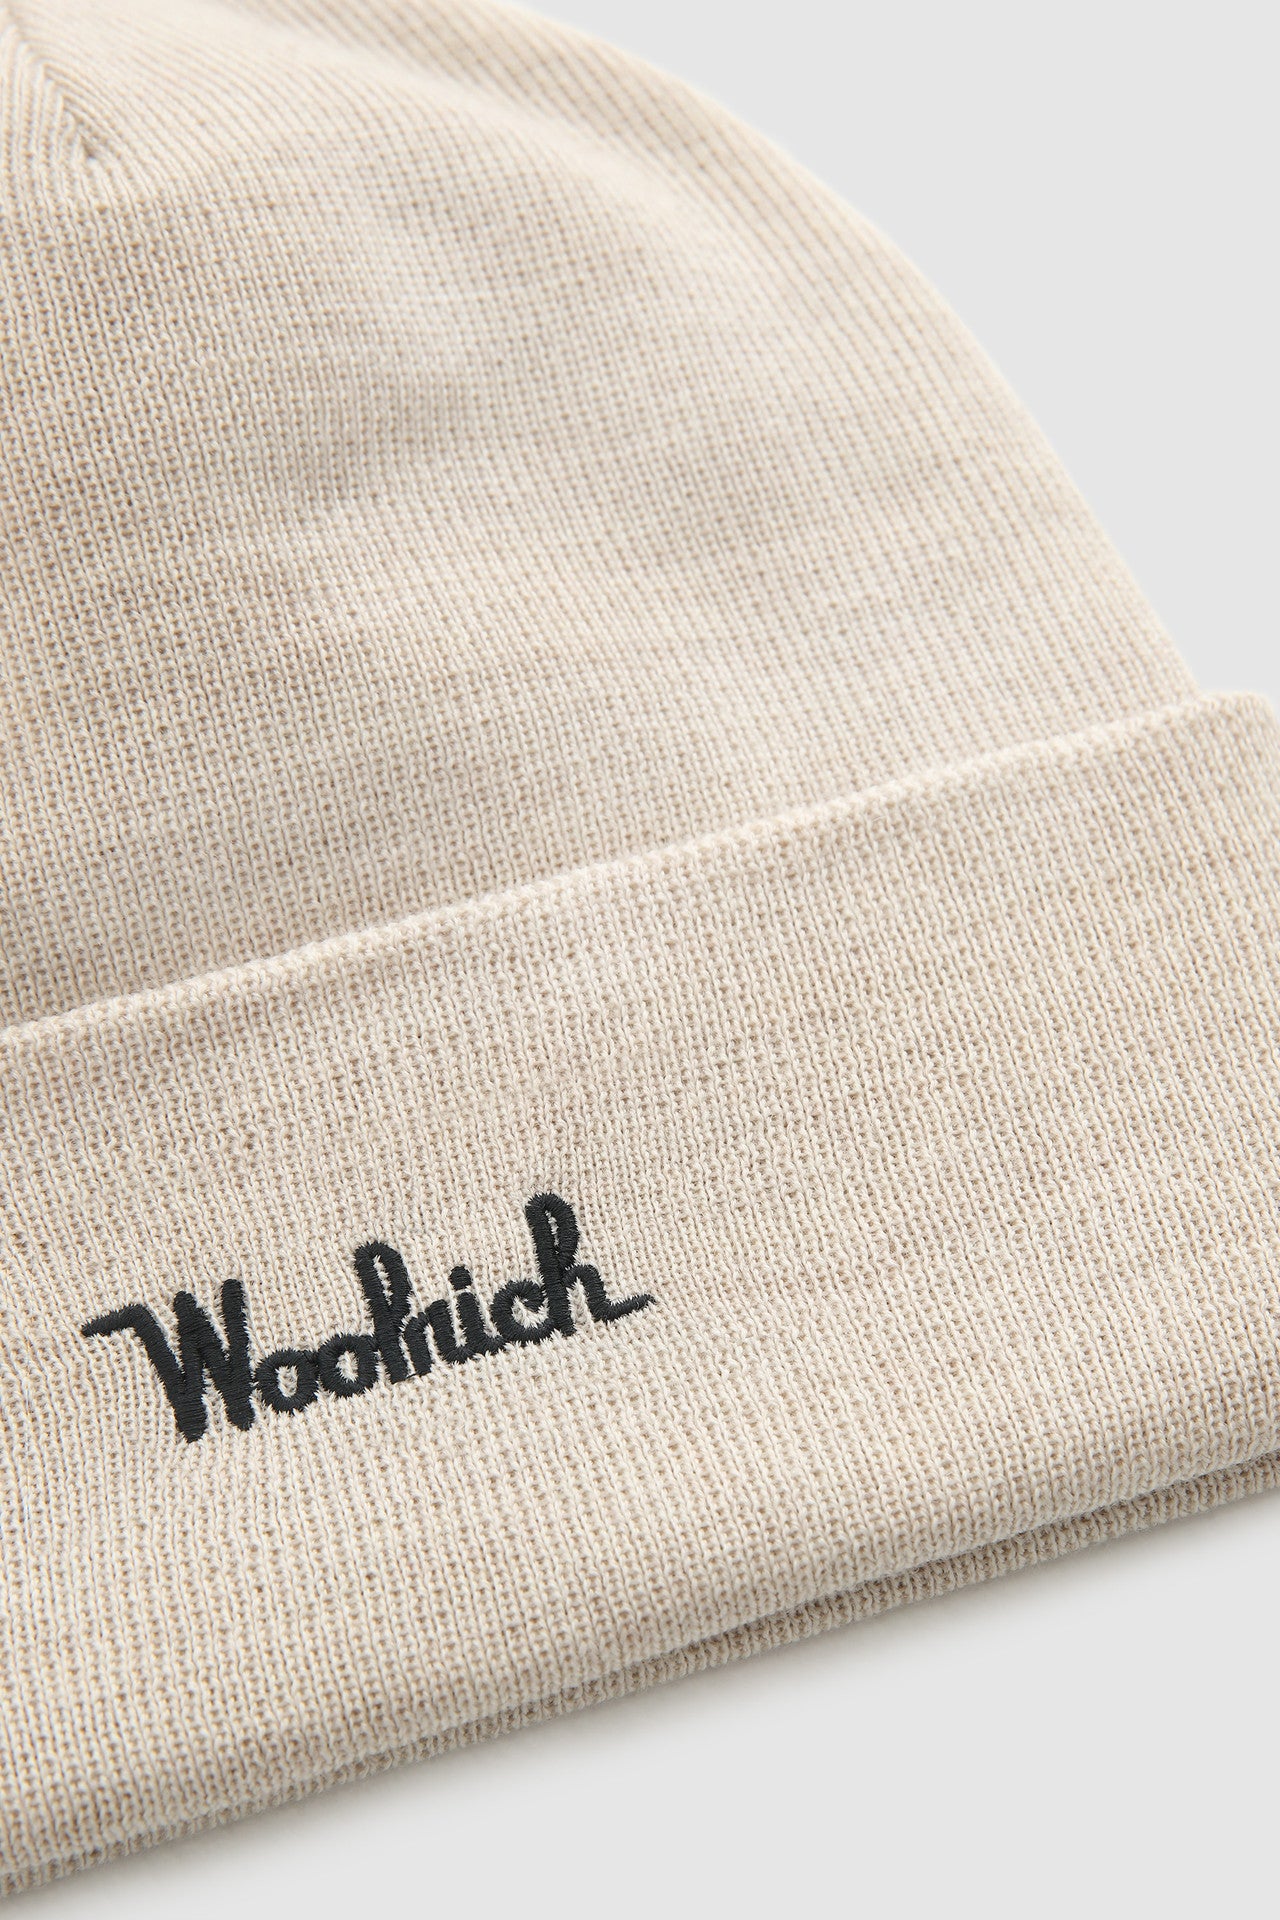 Berretto con logo Woolrich / Beige - Ideal Moda